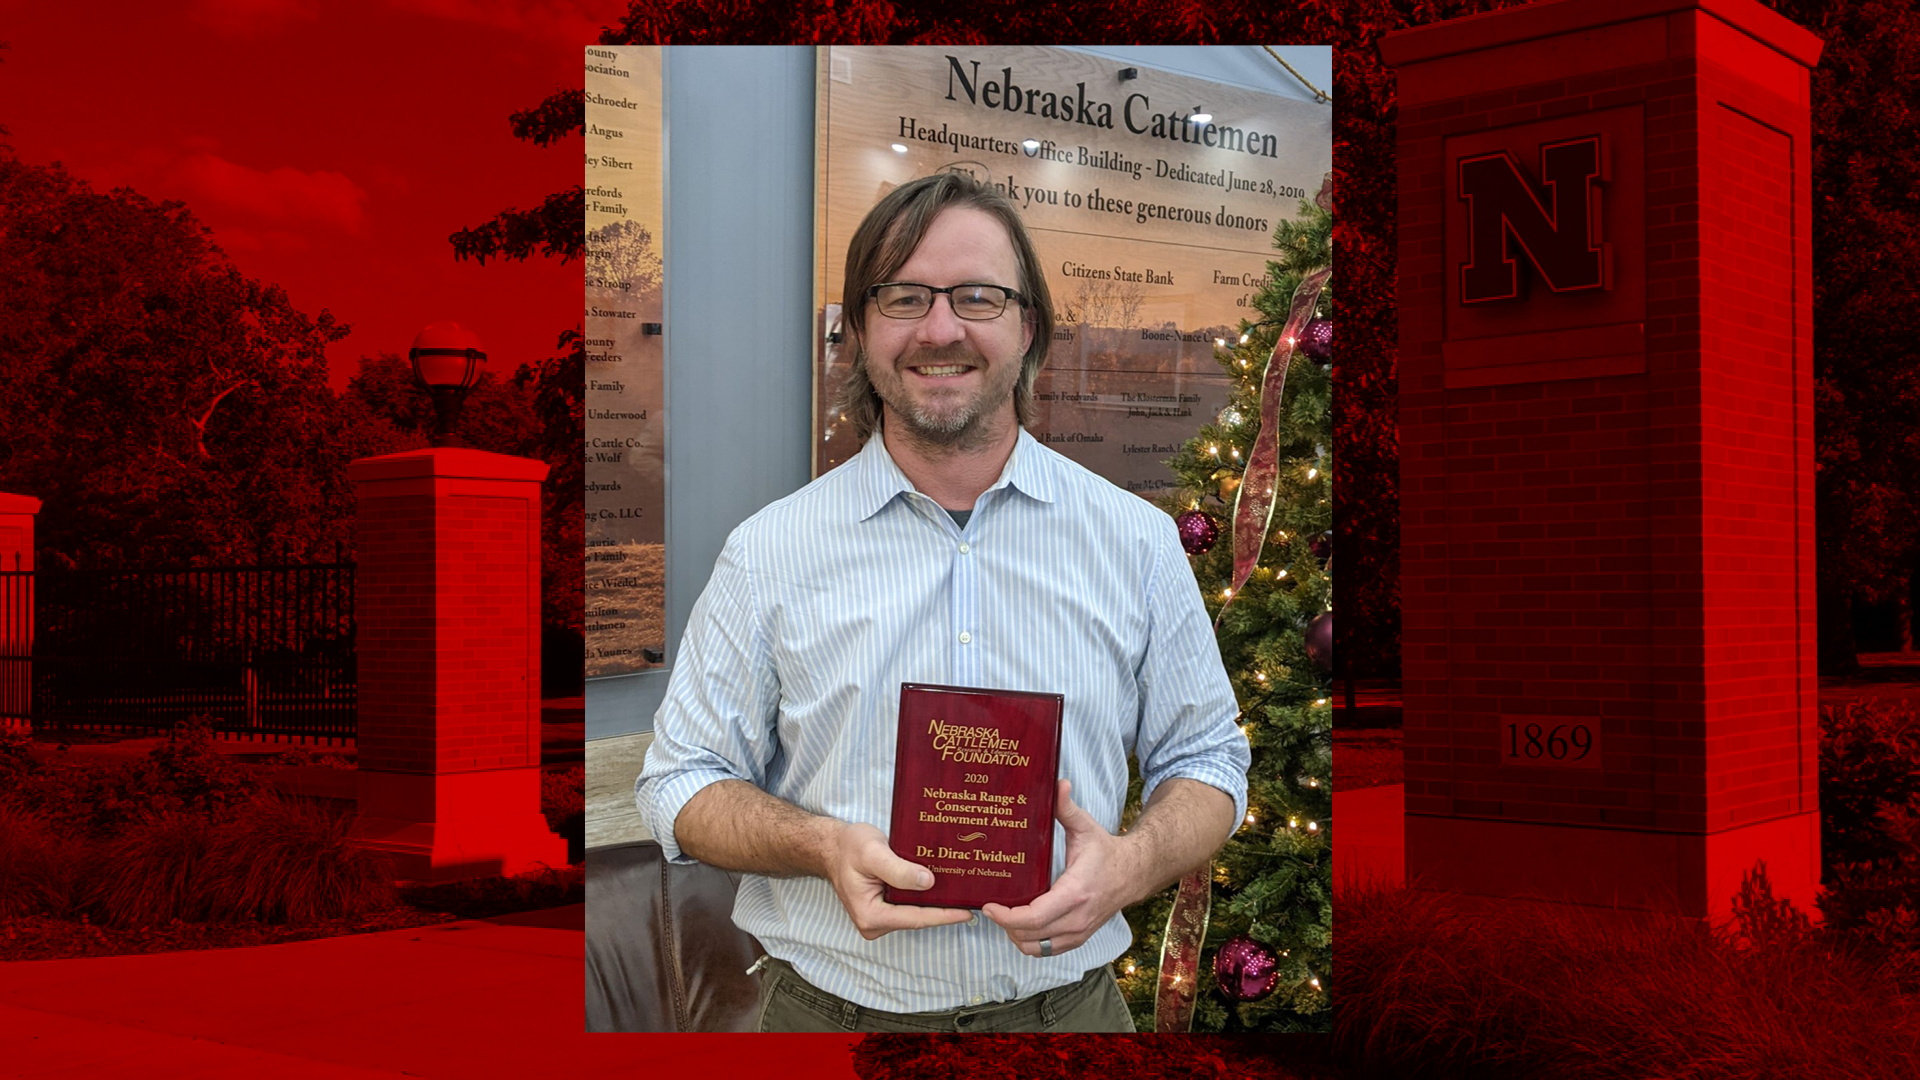 Dirac Twidwell receives the Nebraska Range & Conservation Endowment award from the Nebraska Cattlemen.